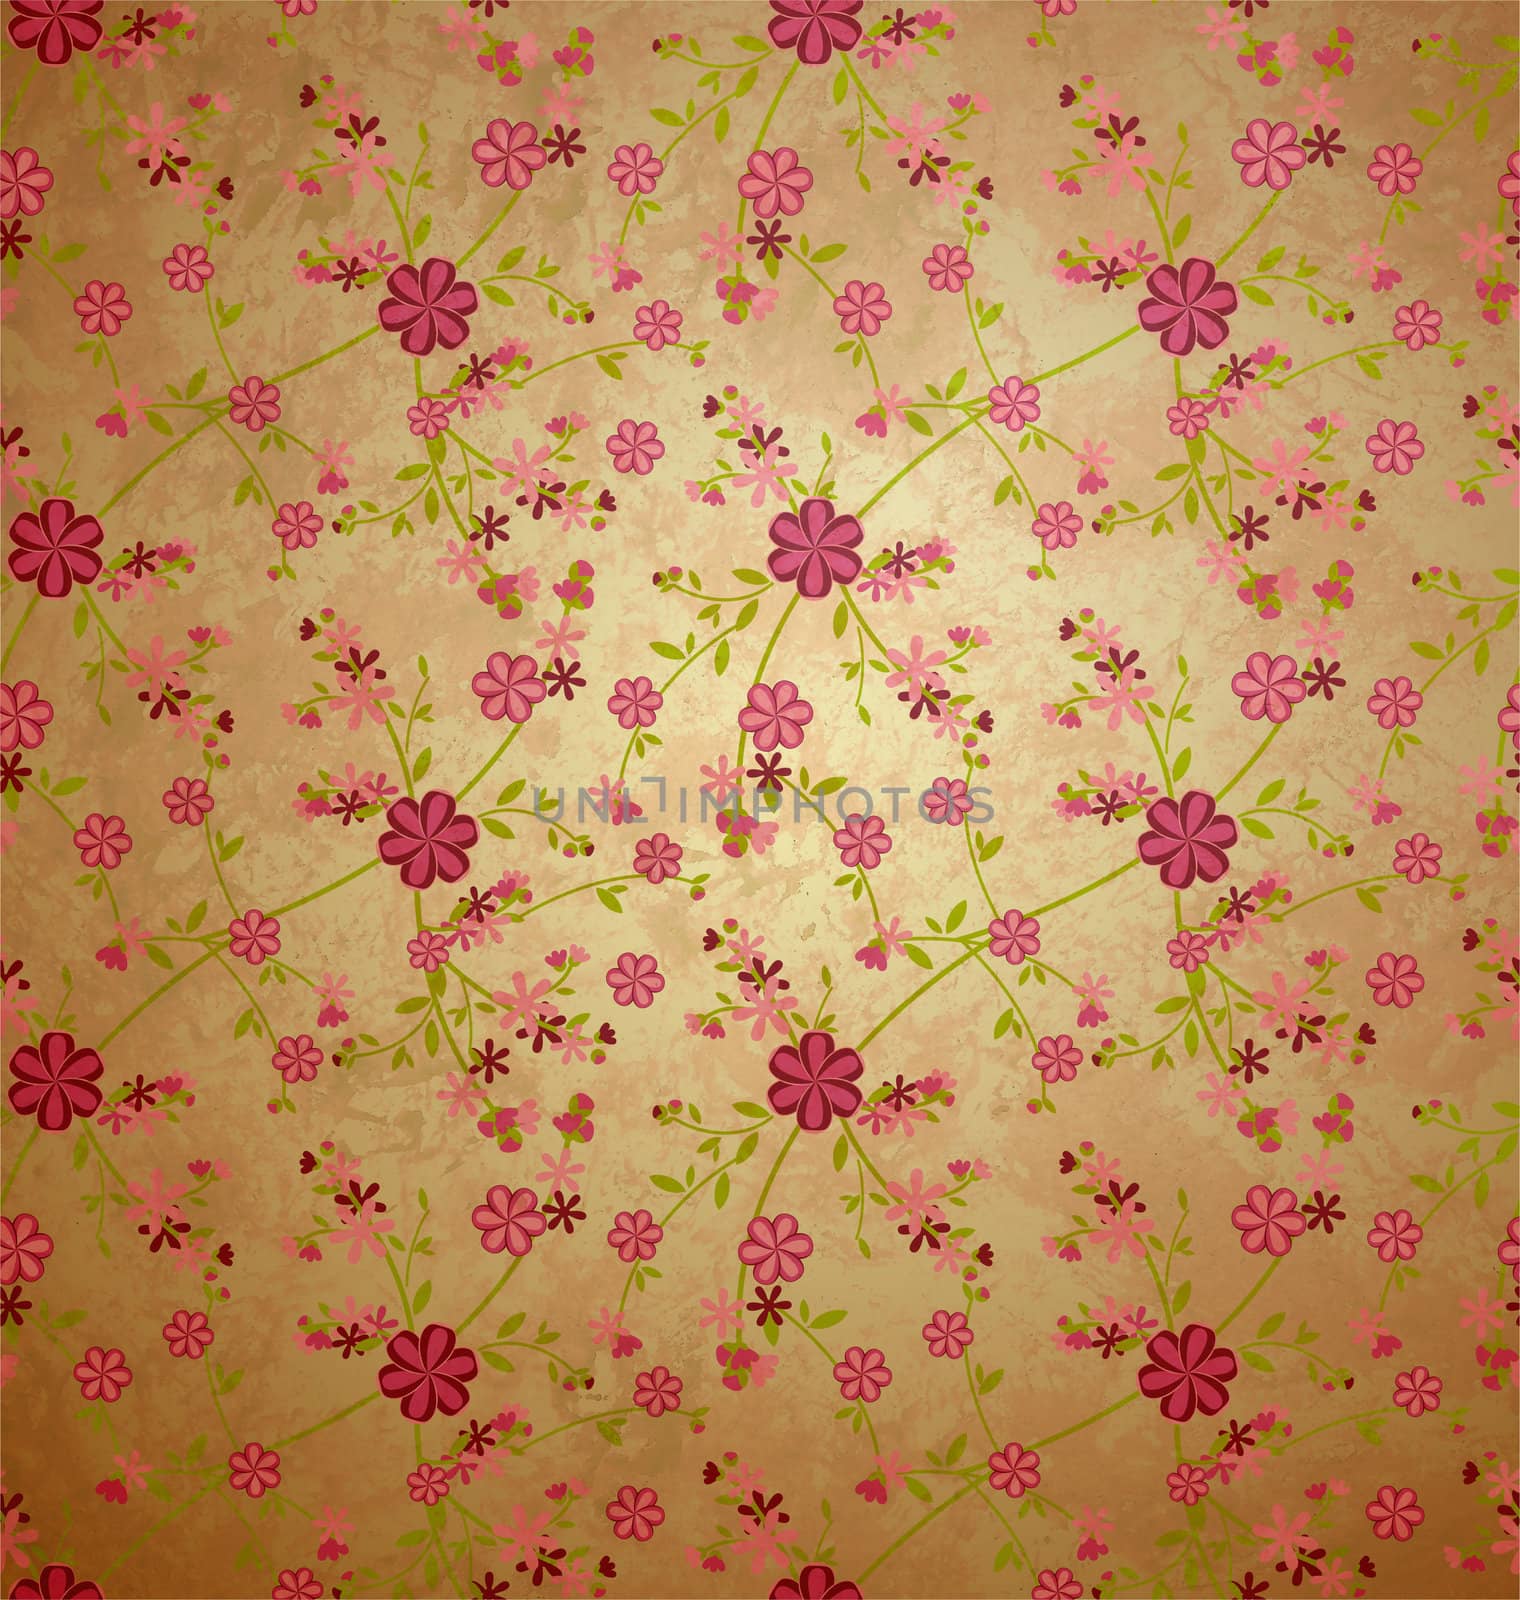 flowers pattern paper grunge vintage background by CherJu